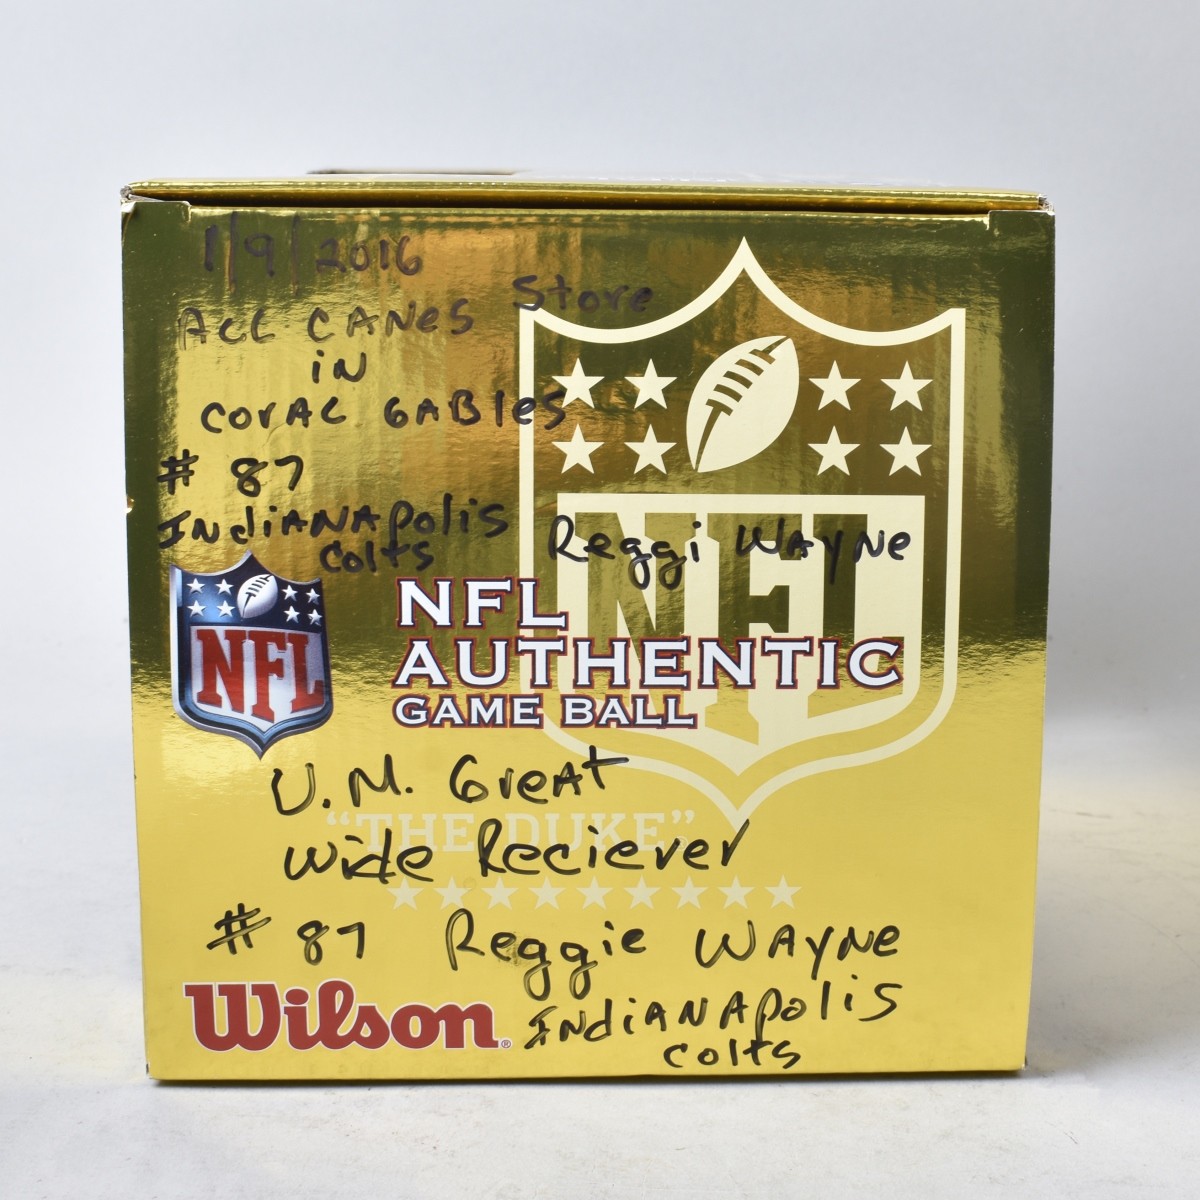 Two (2) NFL Authentic Footballs R. Wayne W. Welker